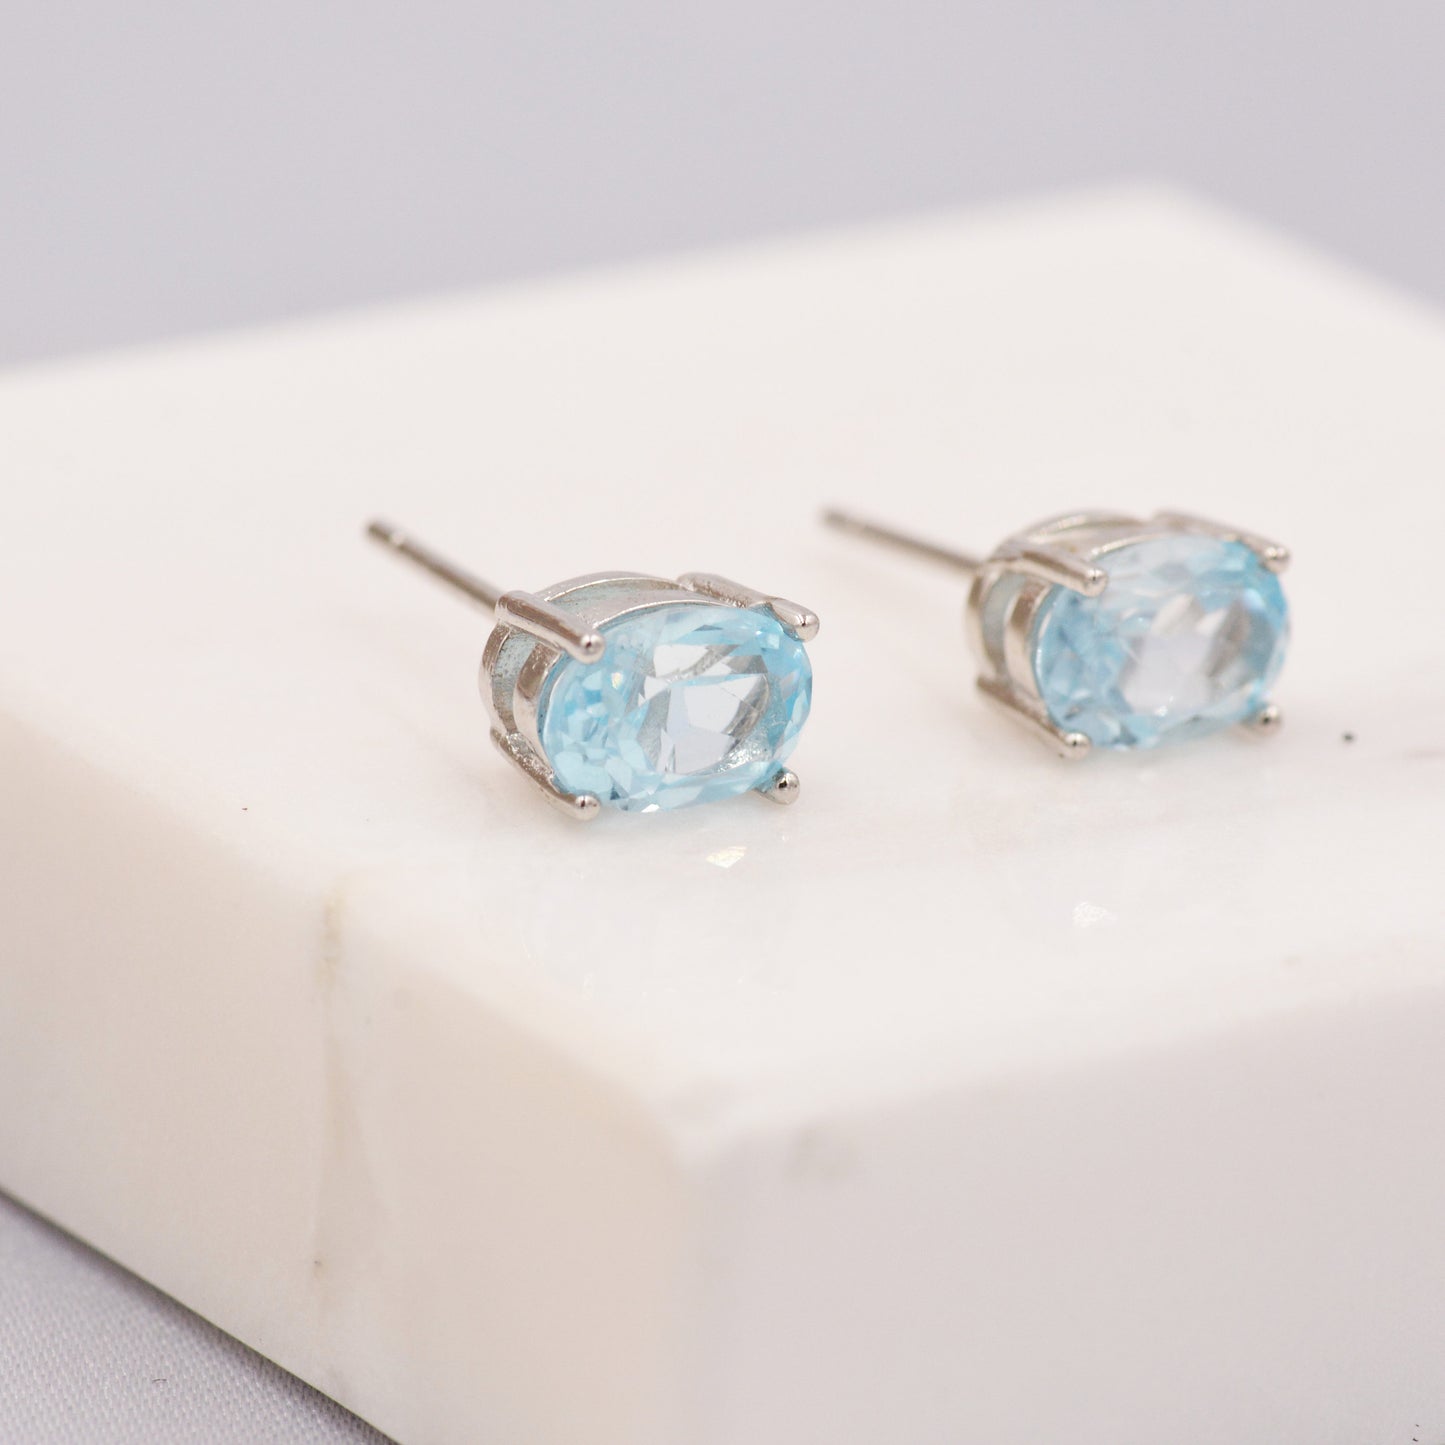 Natural Blue Topaz Stone Oval Stud Earrings in Sterling Silver - Genuine Blue Topaz Crystal Stud Earrings  - Semi Precious Gemstone